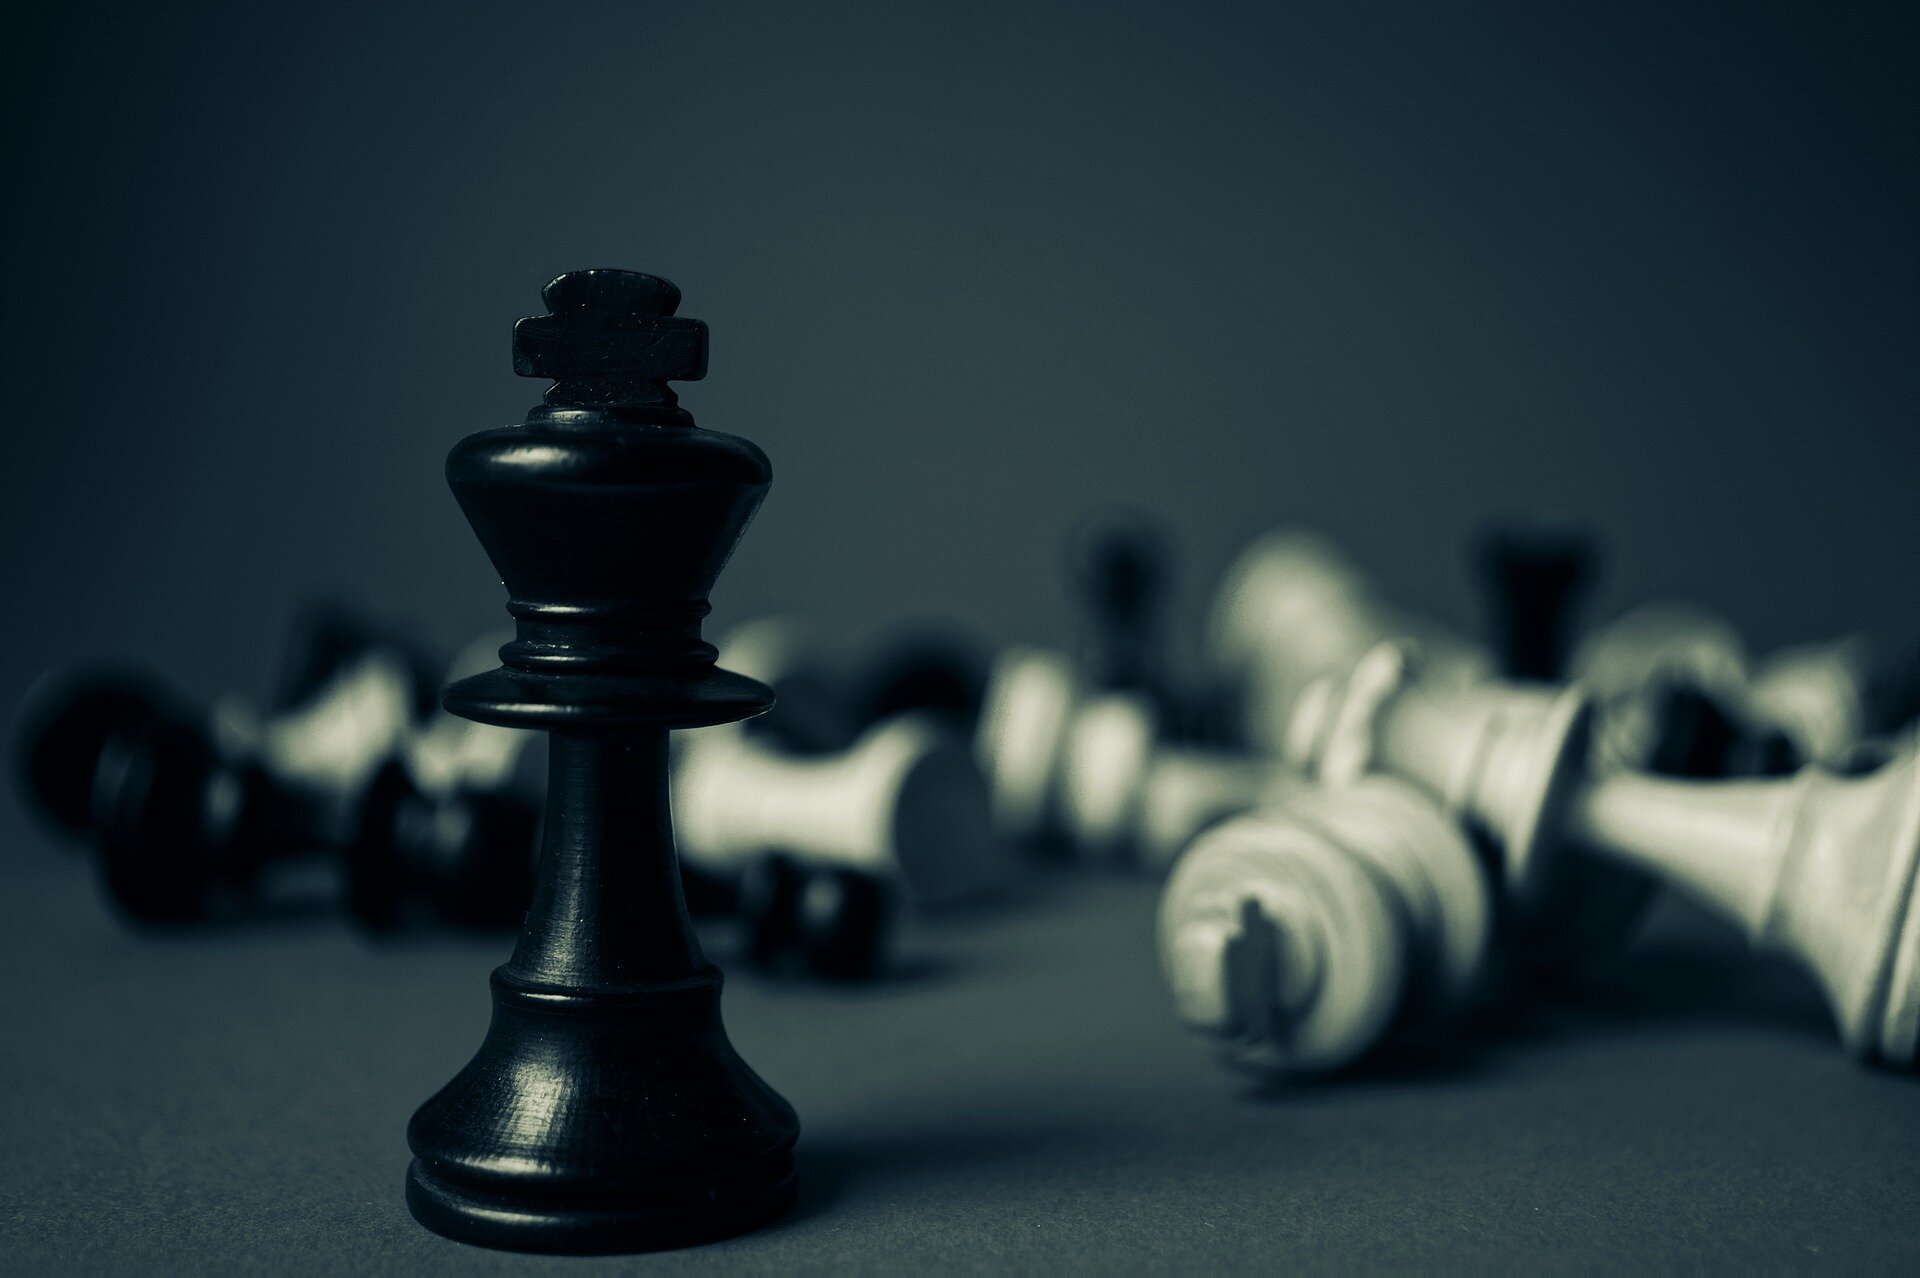 DeepMind's AlphaZero beats state-of-the-art chess and shogi game